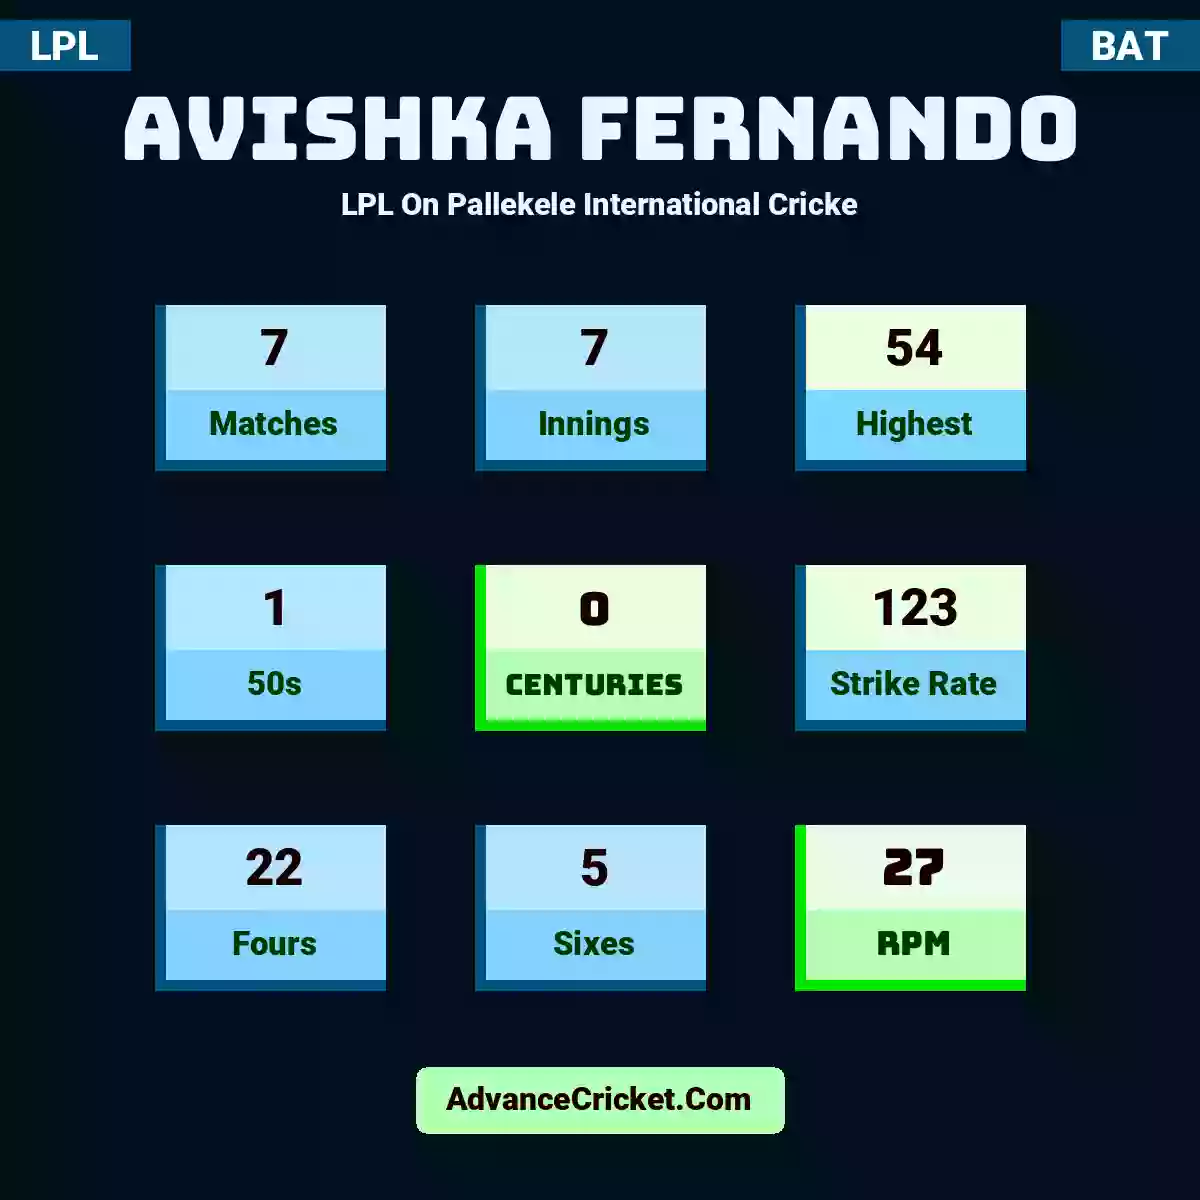 Avishka Fernando LPL  On Pallekele International Cricke, Avishka Fernando played 7 matches, scored 54 runs as highest, 1 half-centuries, and 0 centuries, with a strike rate of 123. A.Fernando hit 22 fours and 5 sixes, with an RPM of 27.